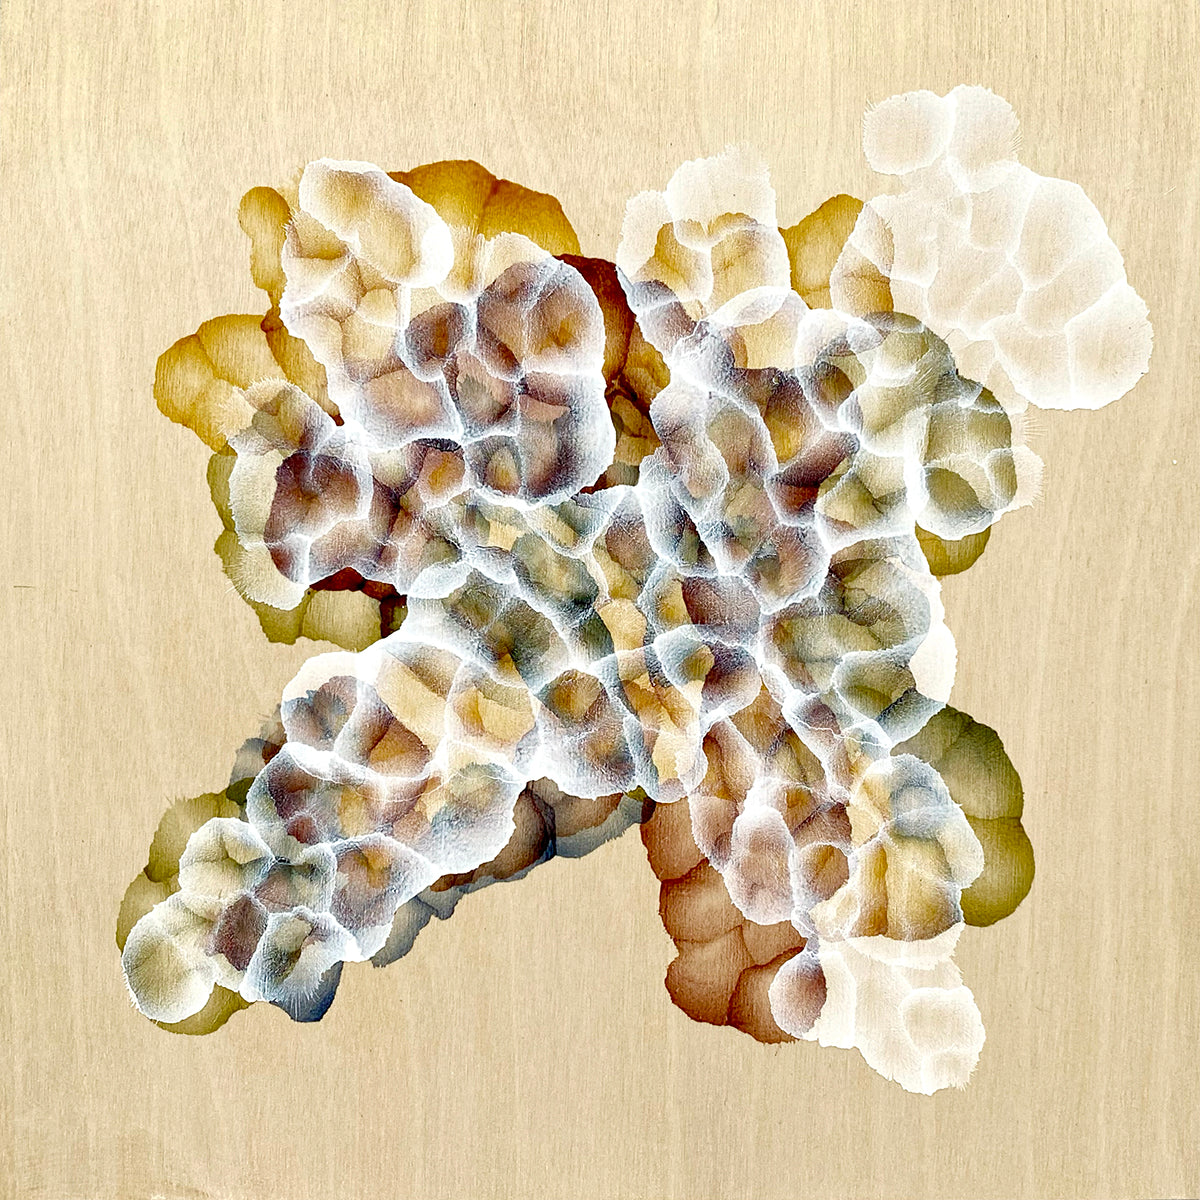 Bio-Cluster Reef Bloom III – Original Abstract Painting